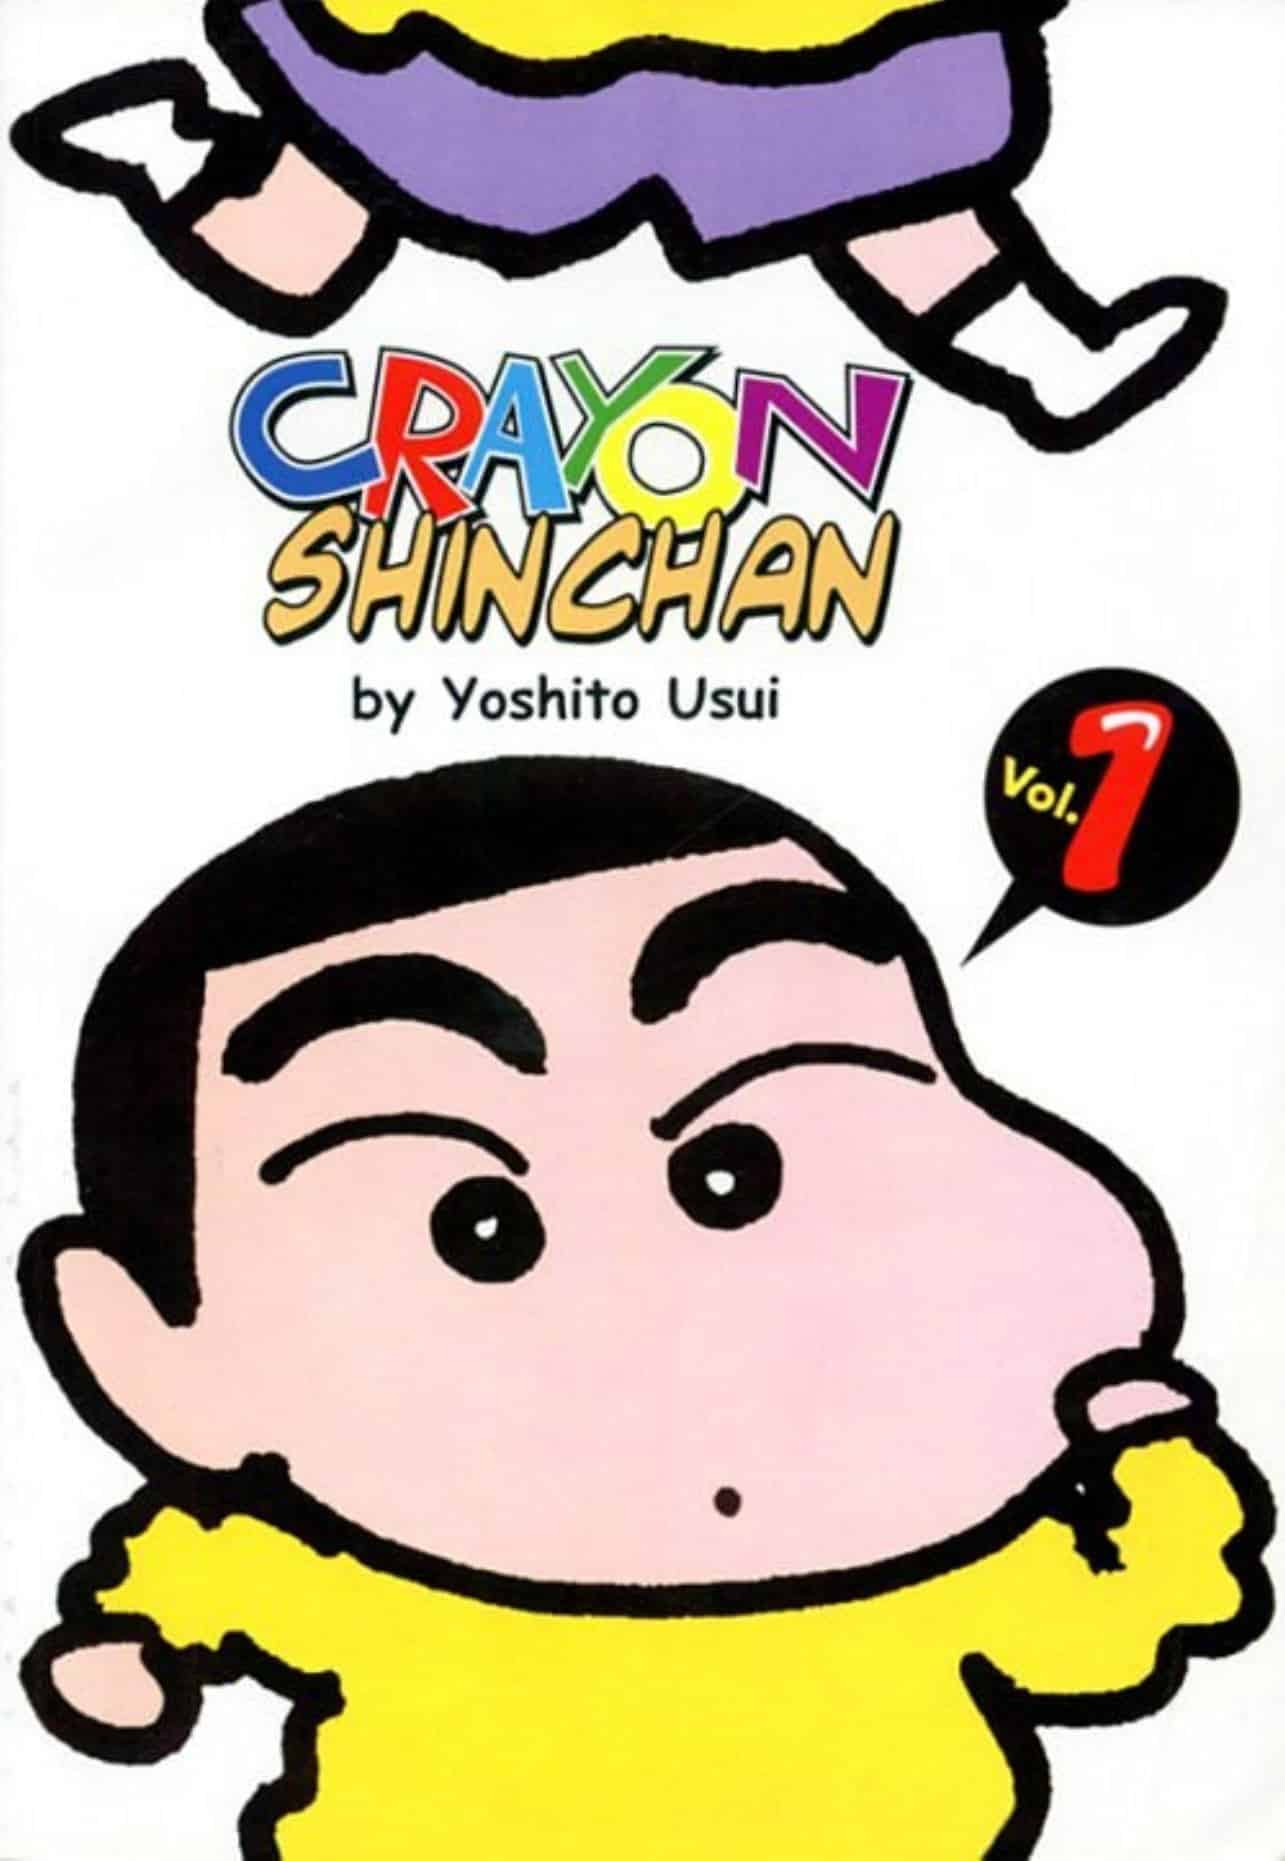 Crayon Shin chan manga vol 1